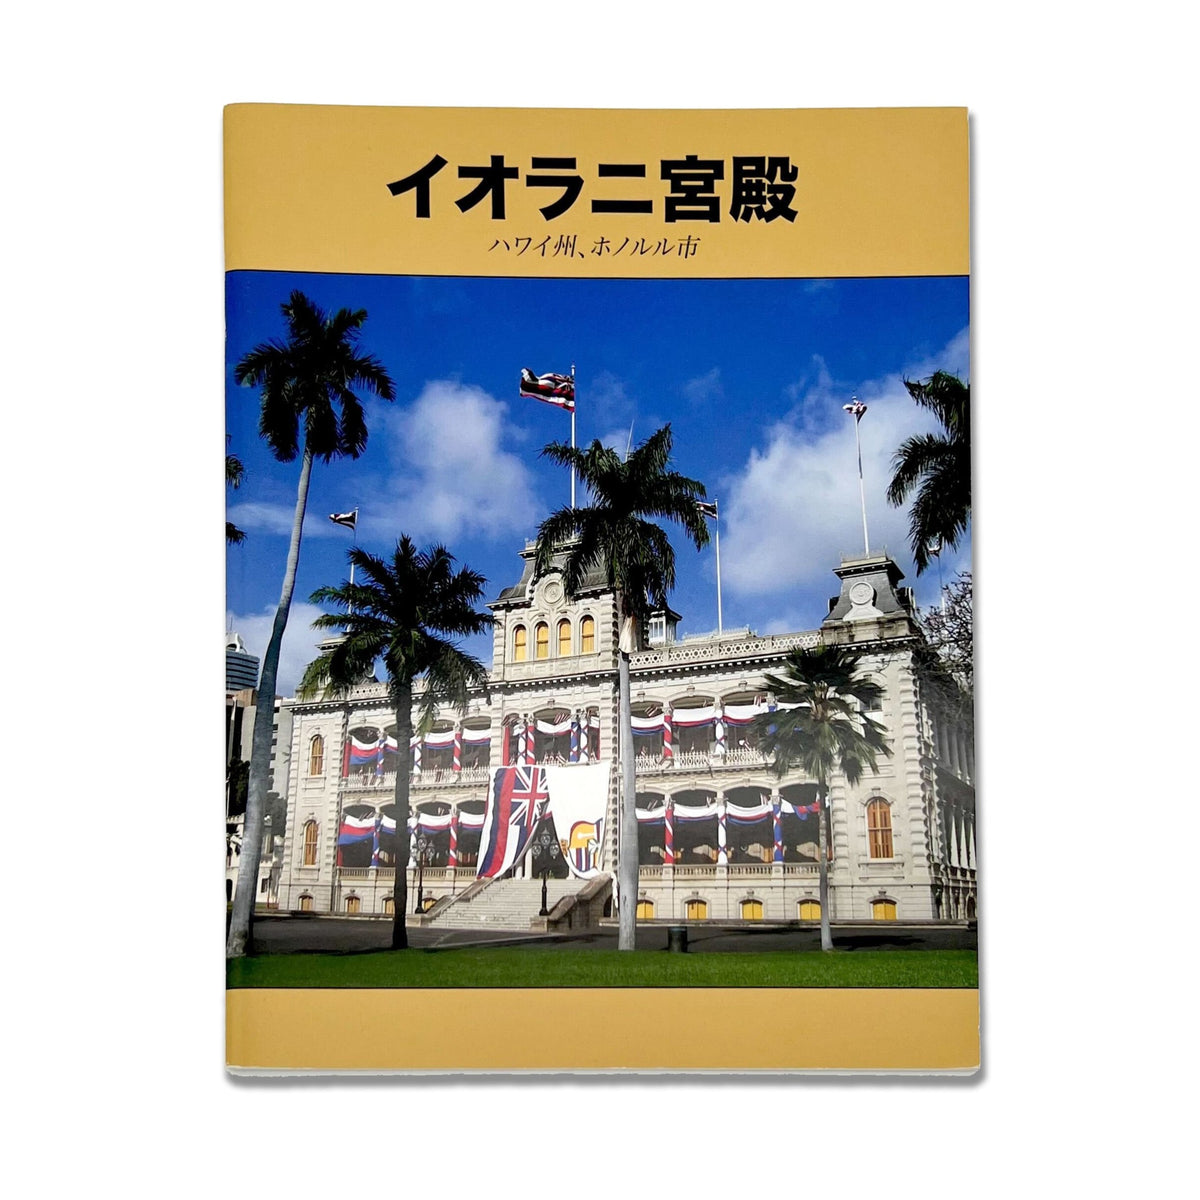 Iolani Palace Guidebook (Japanese)